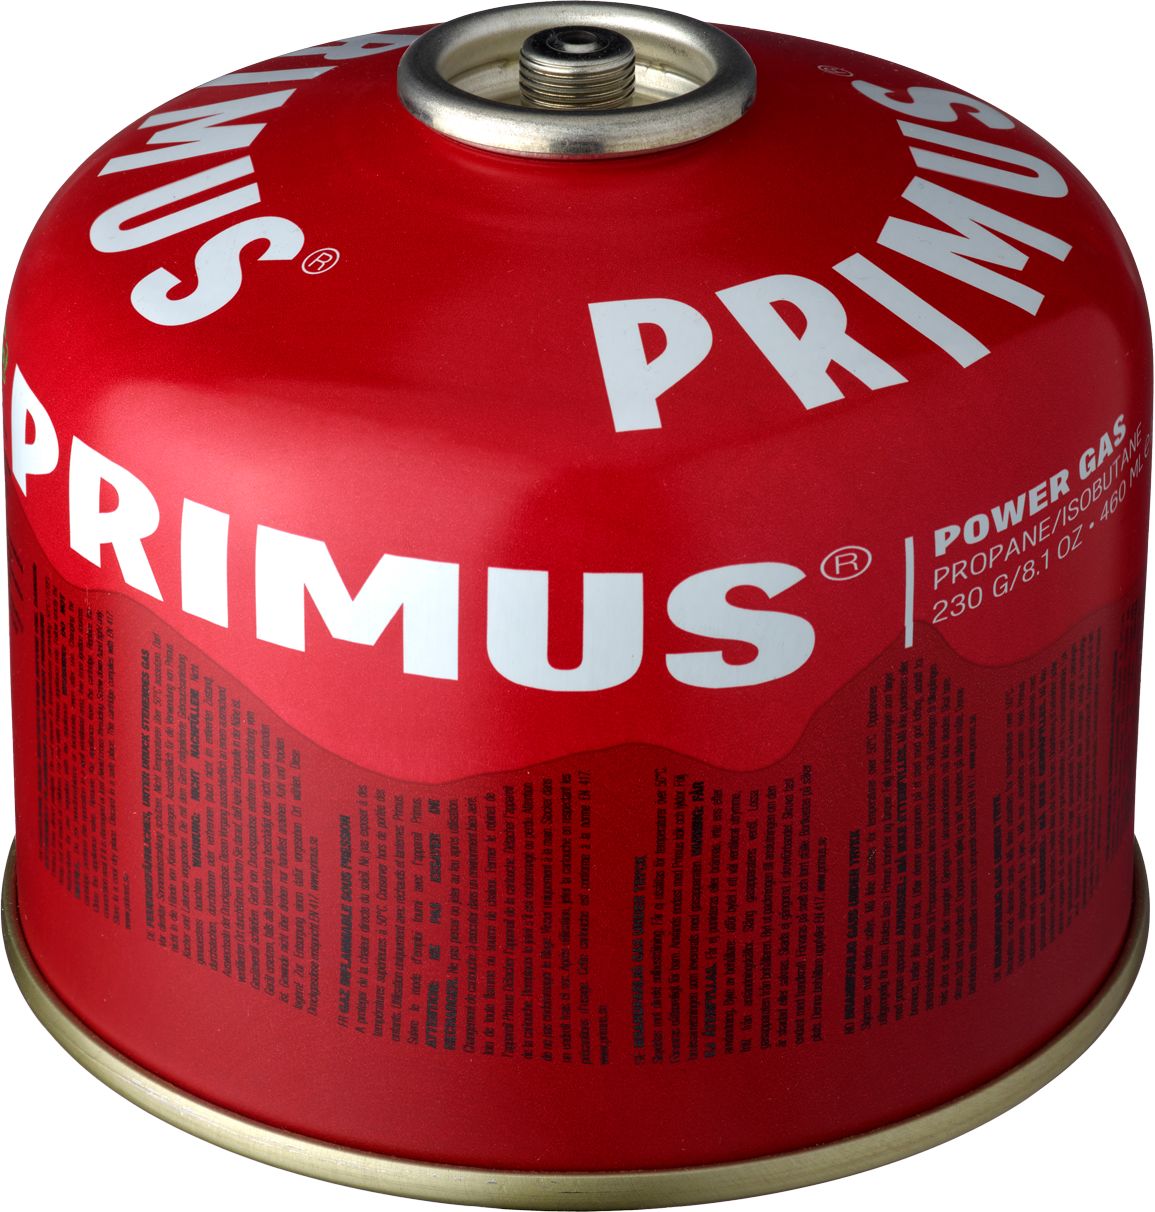 PRIMUS, POWER GAS 230G L2